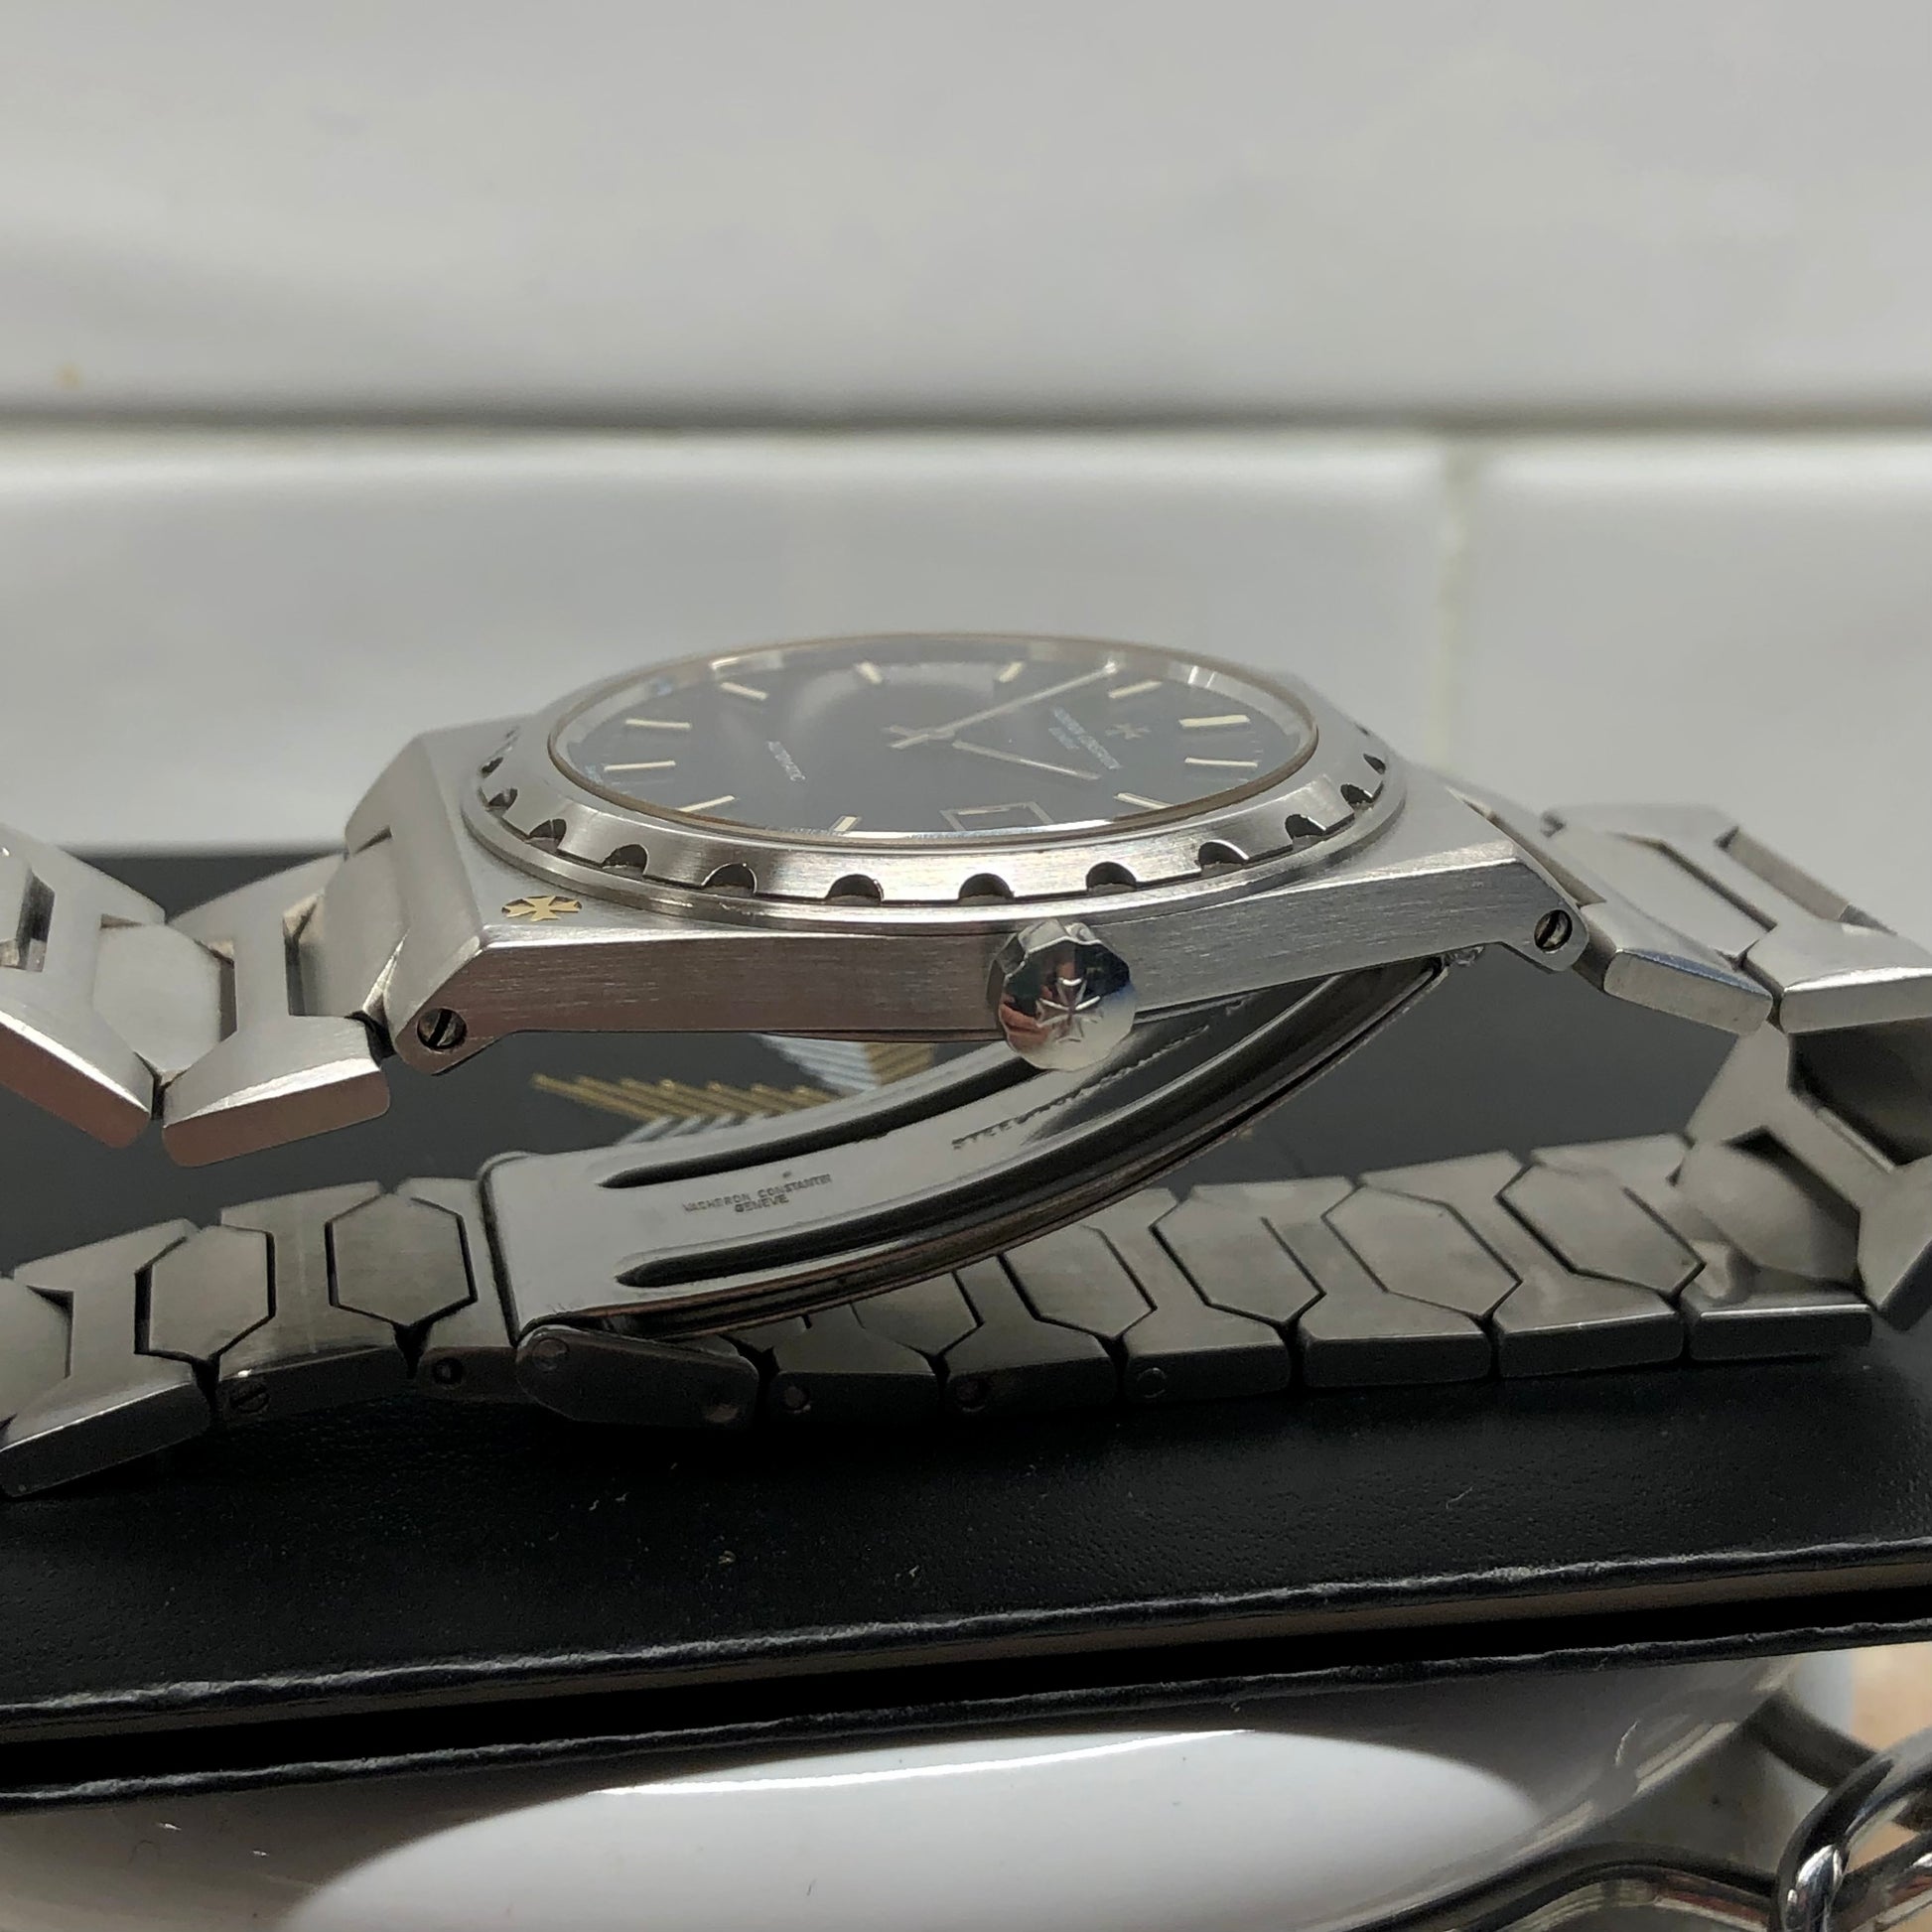 1978 Vacheron Constantin 222 Jumbo 44018 Steel Automatic 38mm Wristwatch with Original Guarantee Papers - Hashtag Watch Company